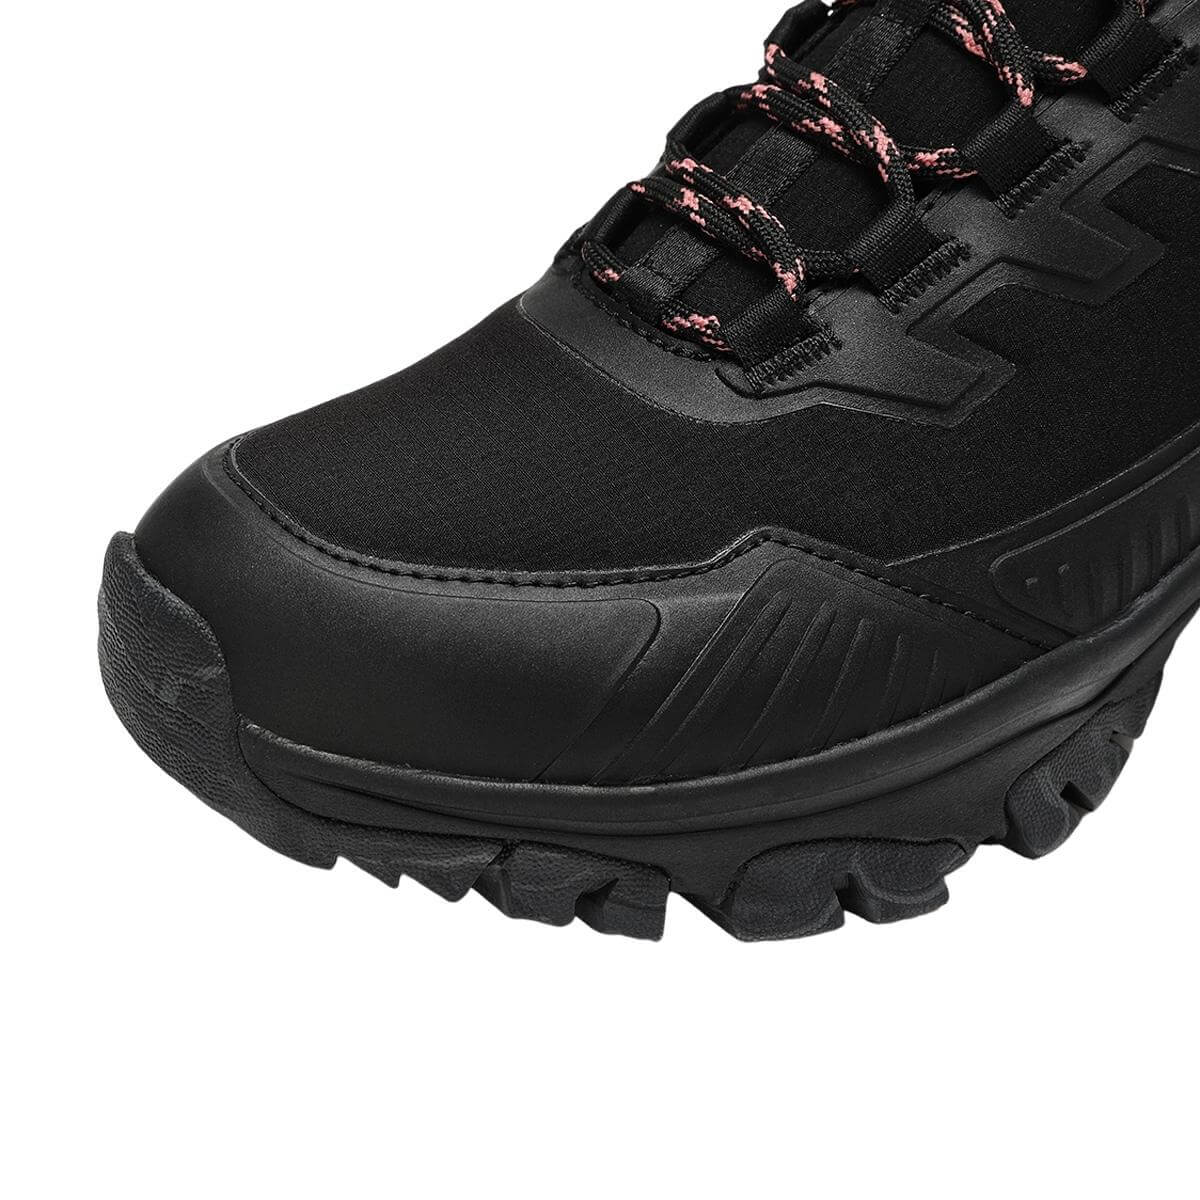 Chaussures de randonnée Augusta - Femme